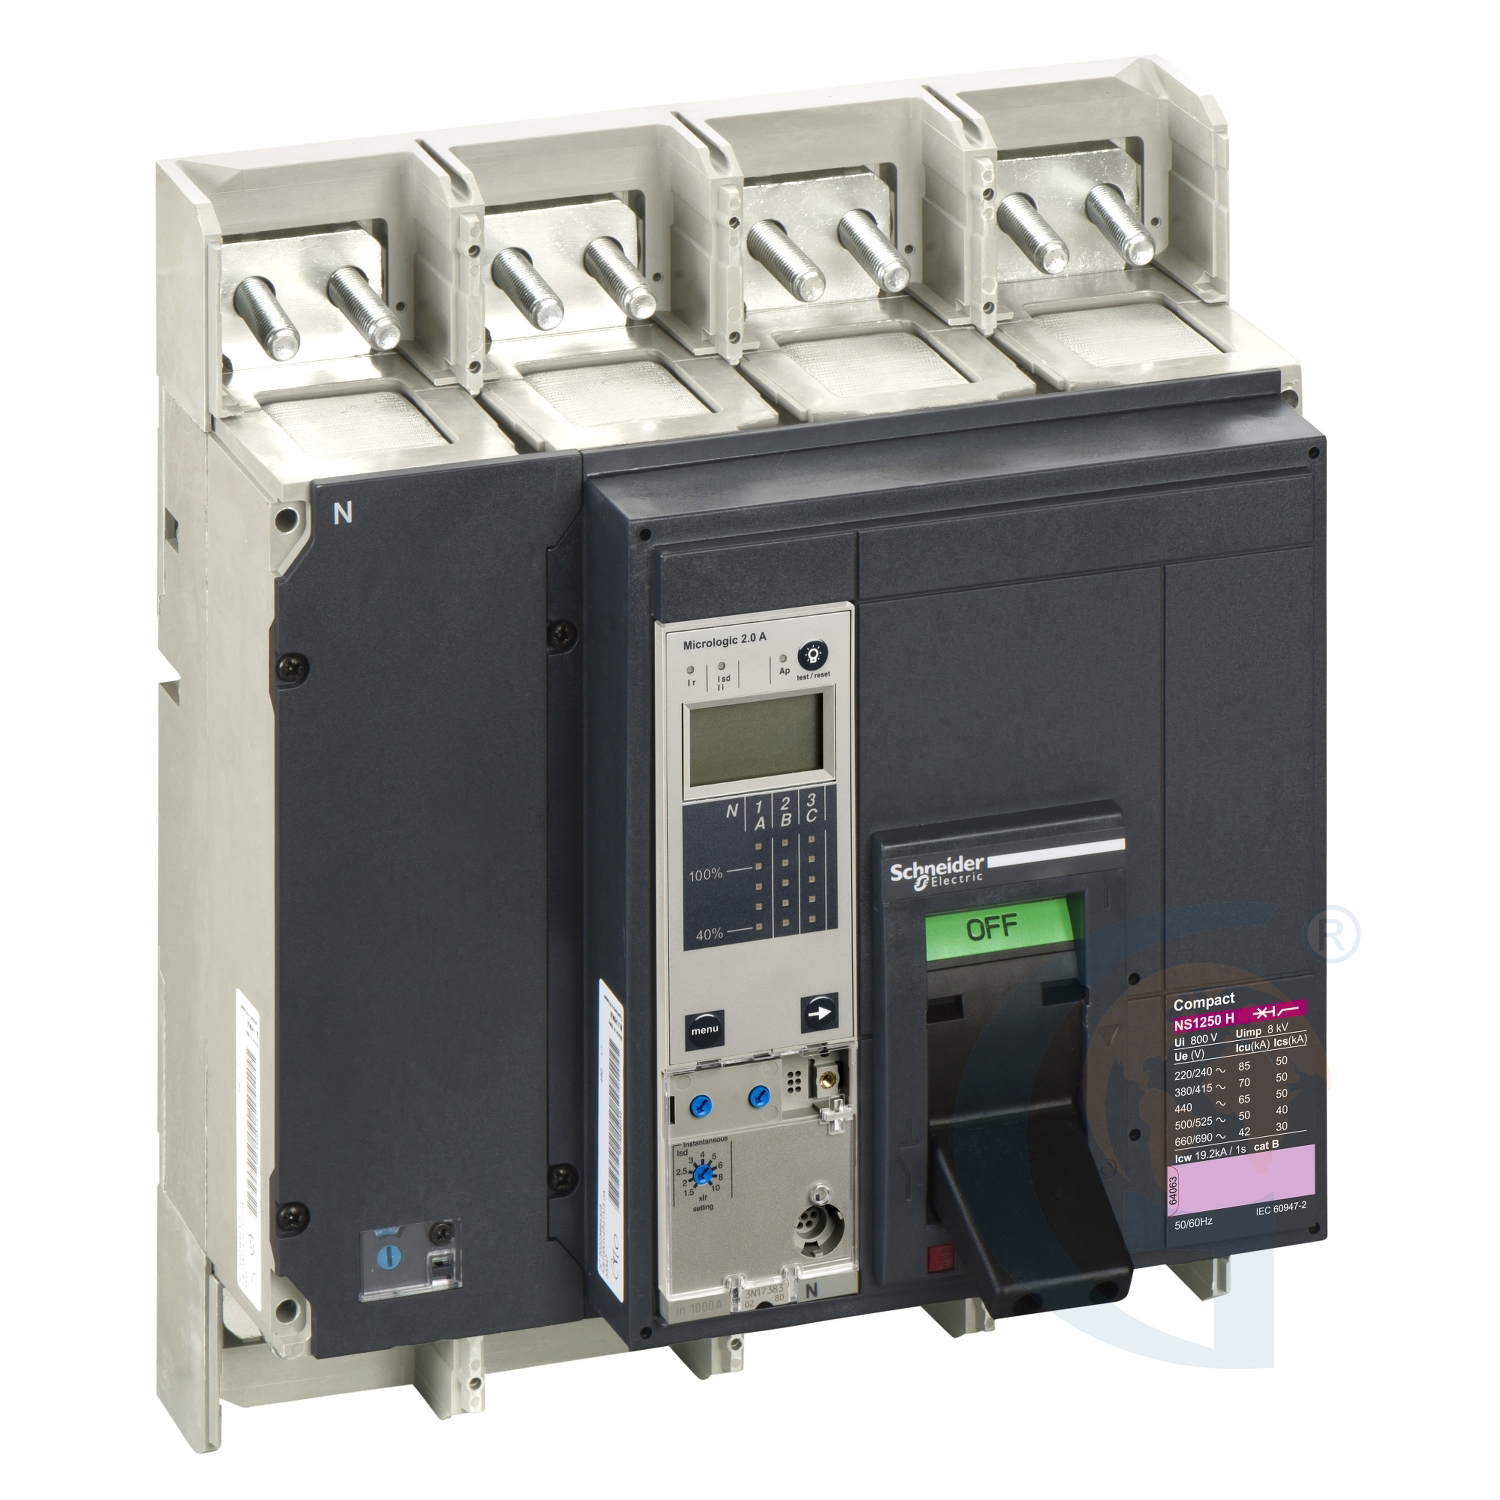 Schneider Electric 33259 circuit breaker Compact NS1250H – Micrologic 2.0 A – 1250 A – 4 poles 4t https://gesrepair.com/wp-content/uploads/2020/Schneider/Schneider_Electric_33259_.jpg